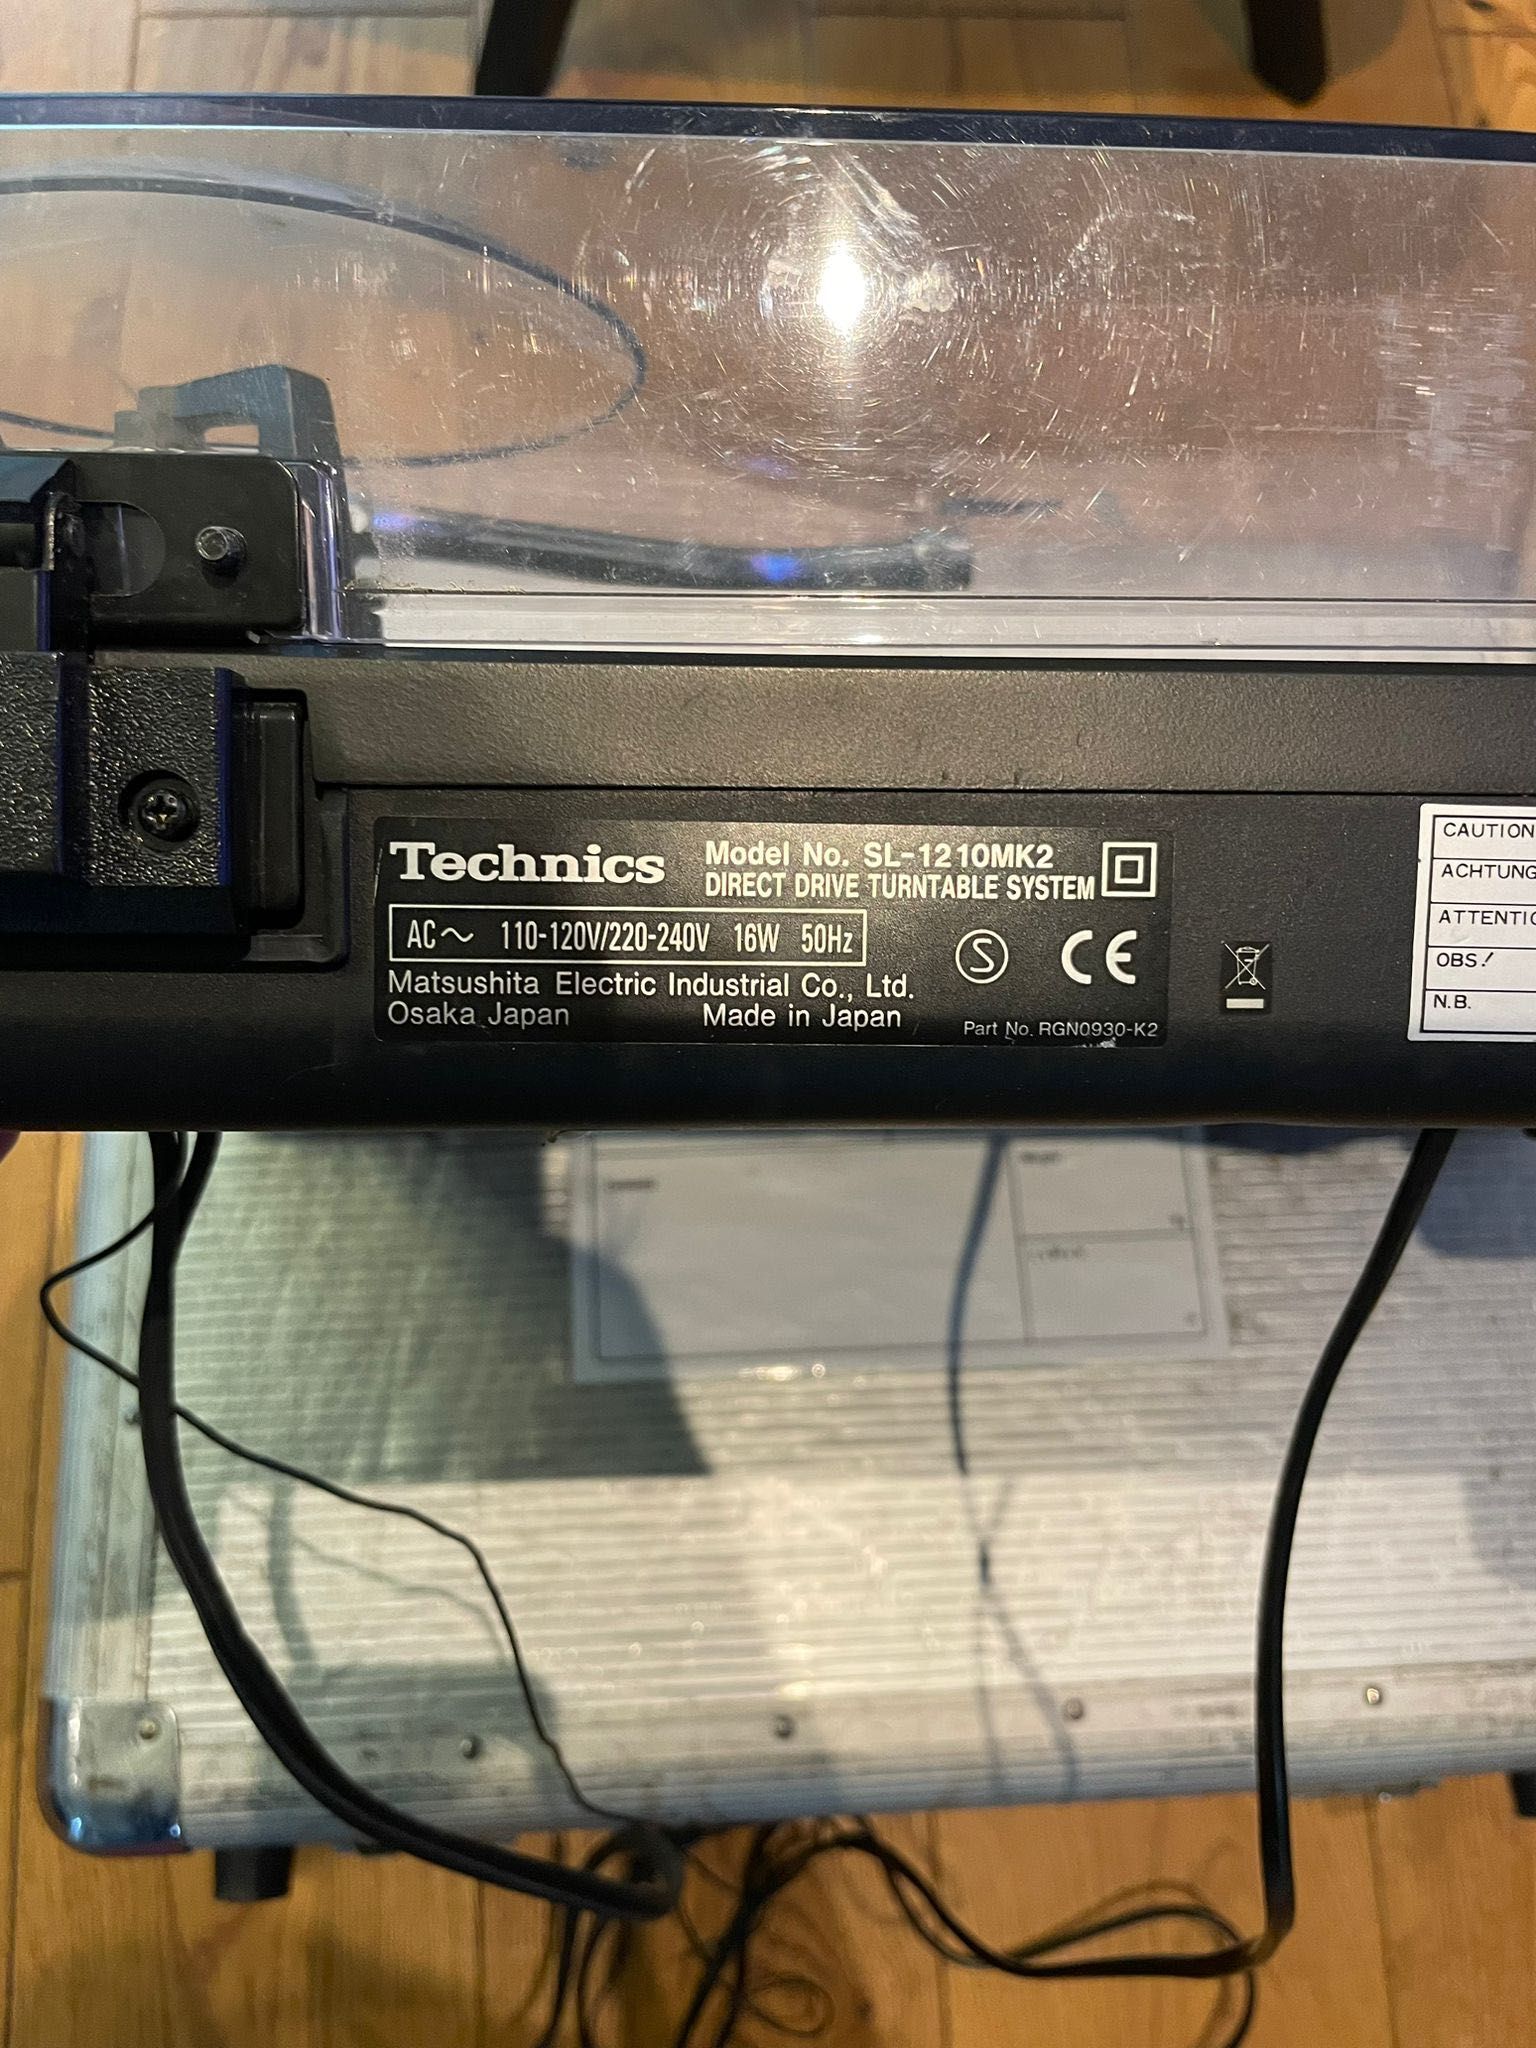 Technics SL-1210 MK2 - direct drive turntable